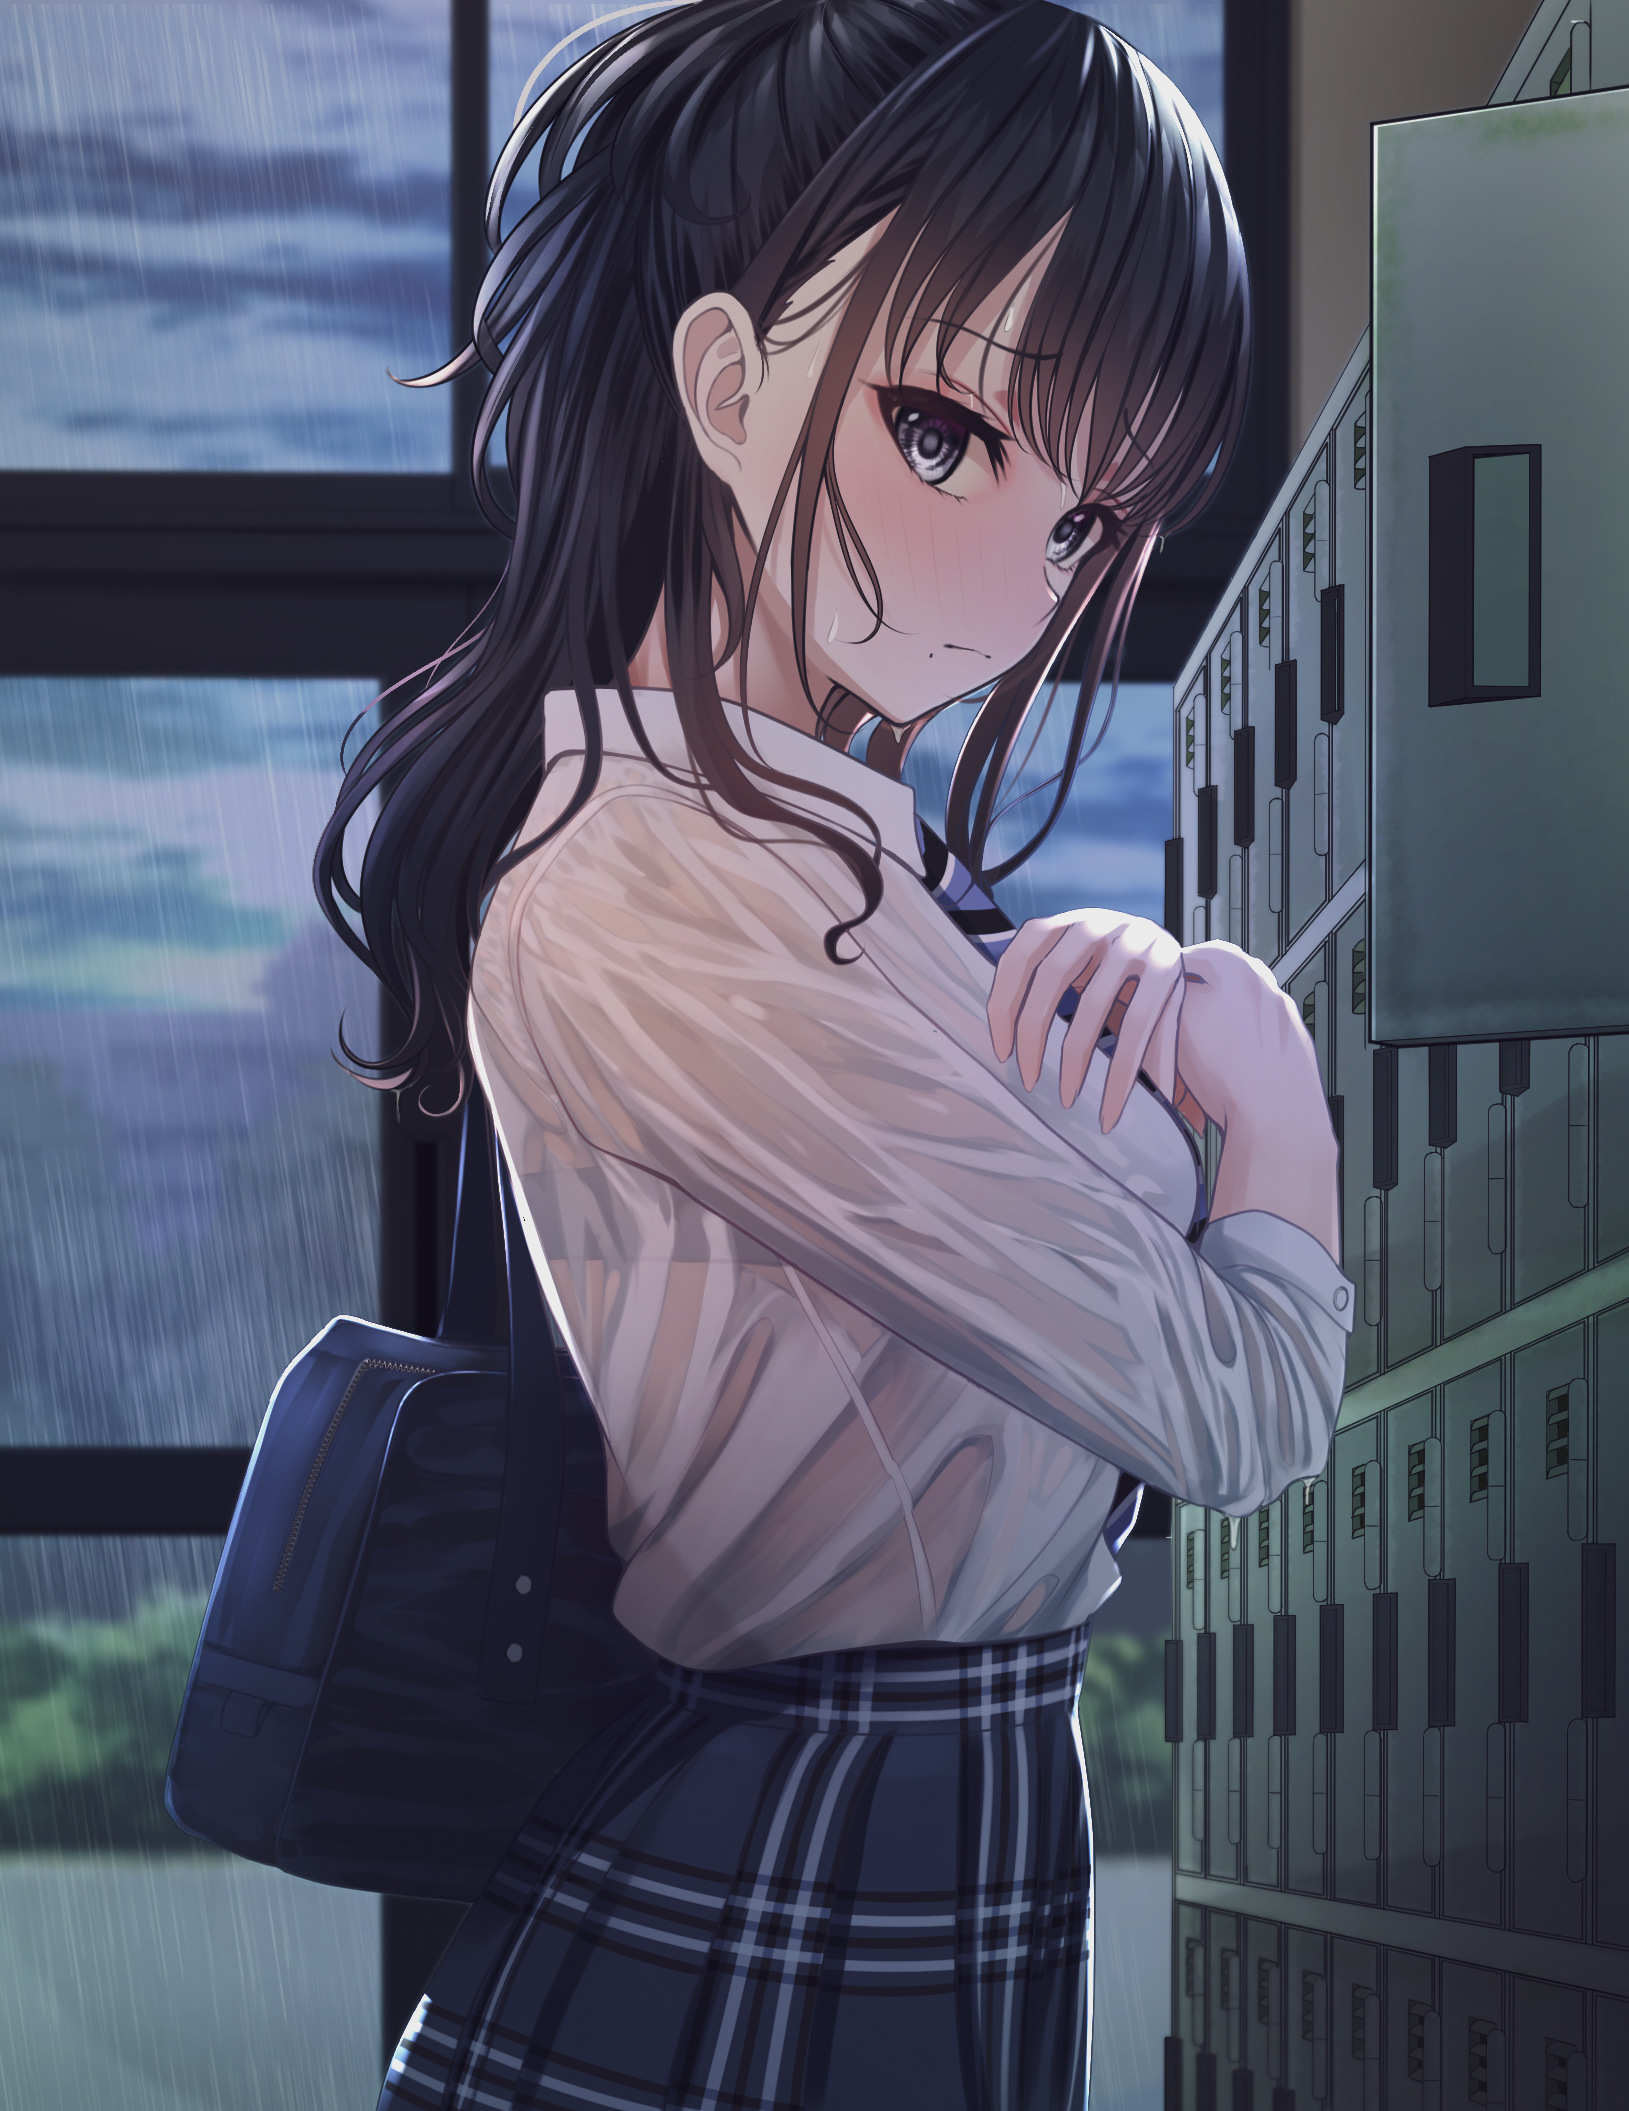 Anime 1629x2111 anime anime girls Turisasu artwork THE iDOLM@STER Kazano Hiori blushing dark hair dark eyes school uniform wet wet clothing